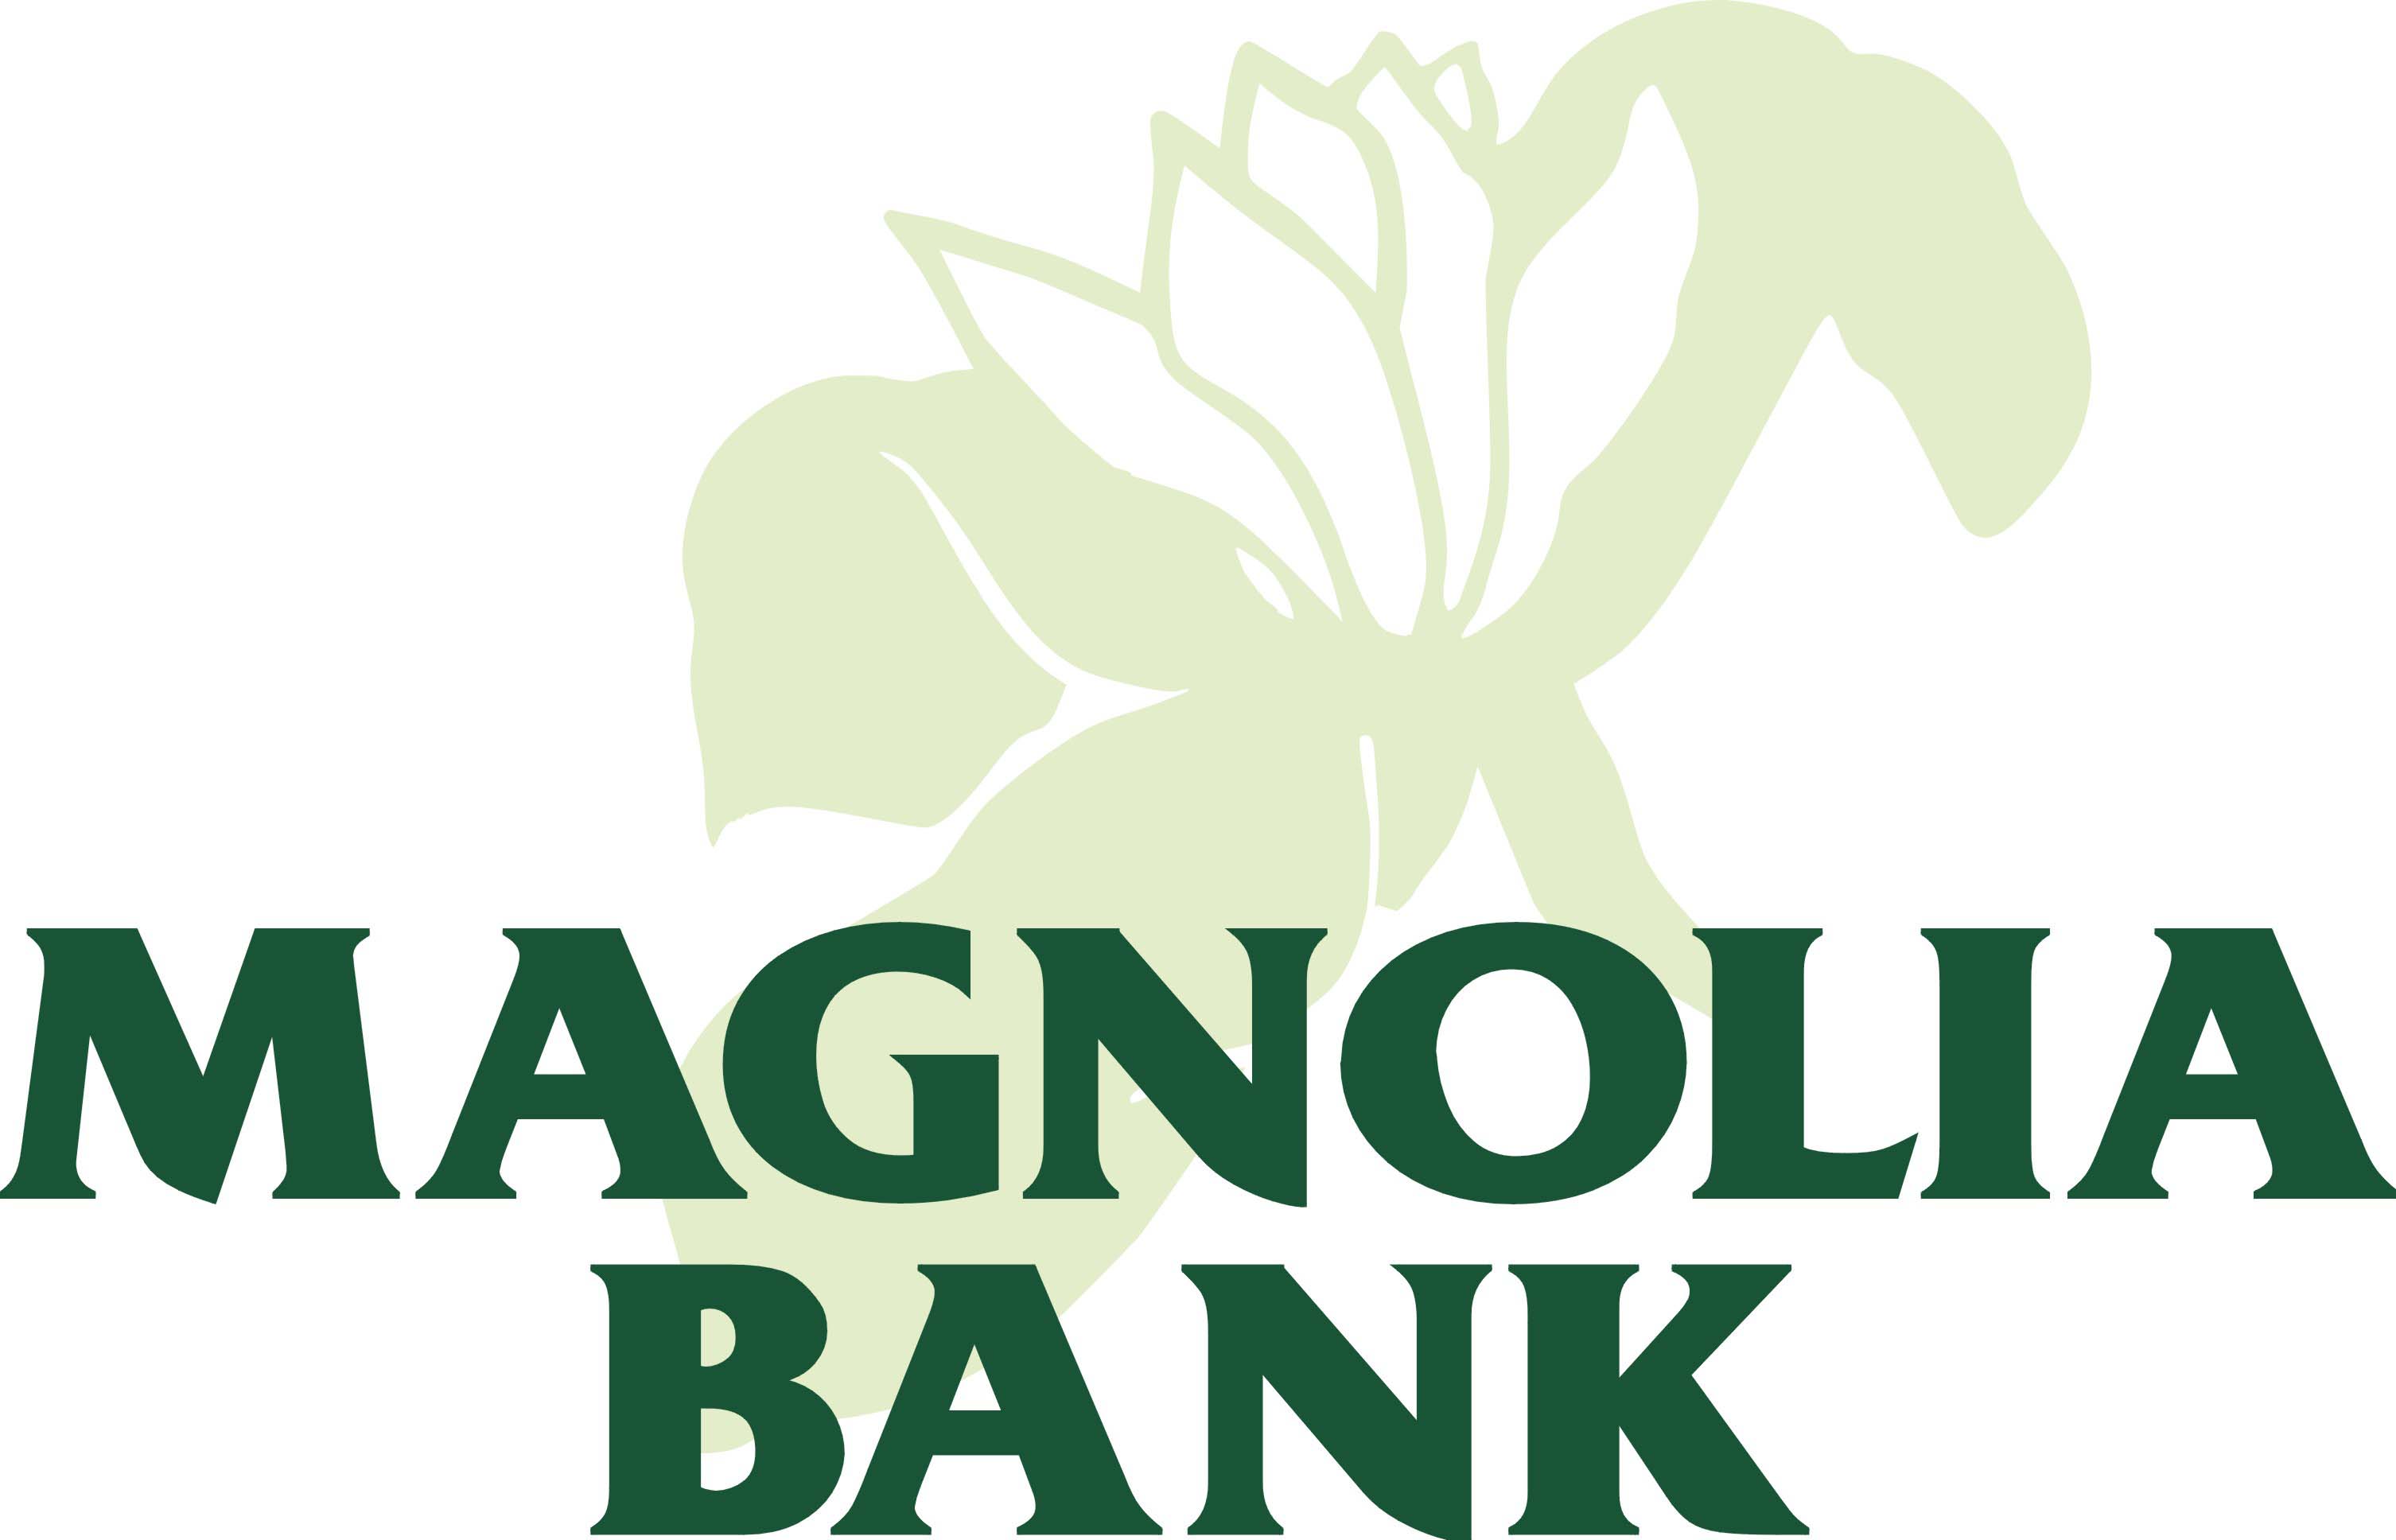 Magnolia Bank logo